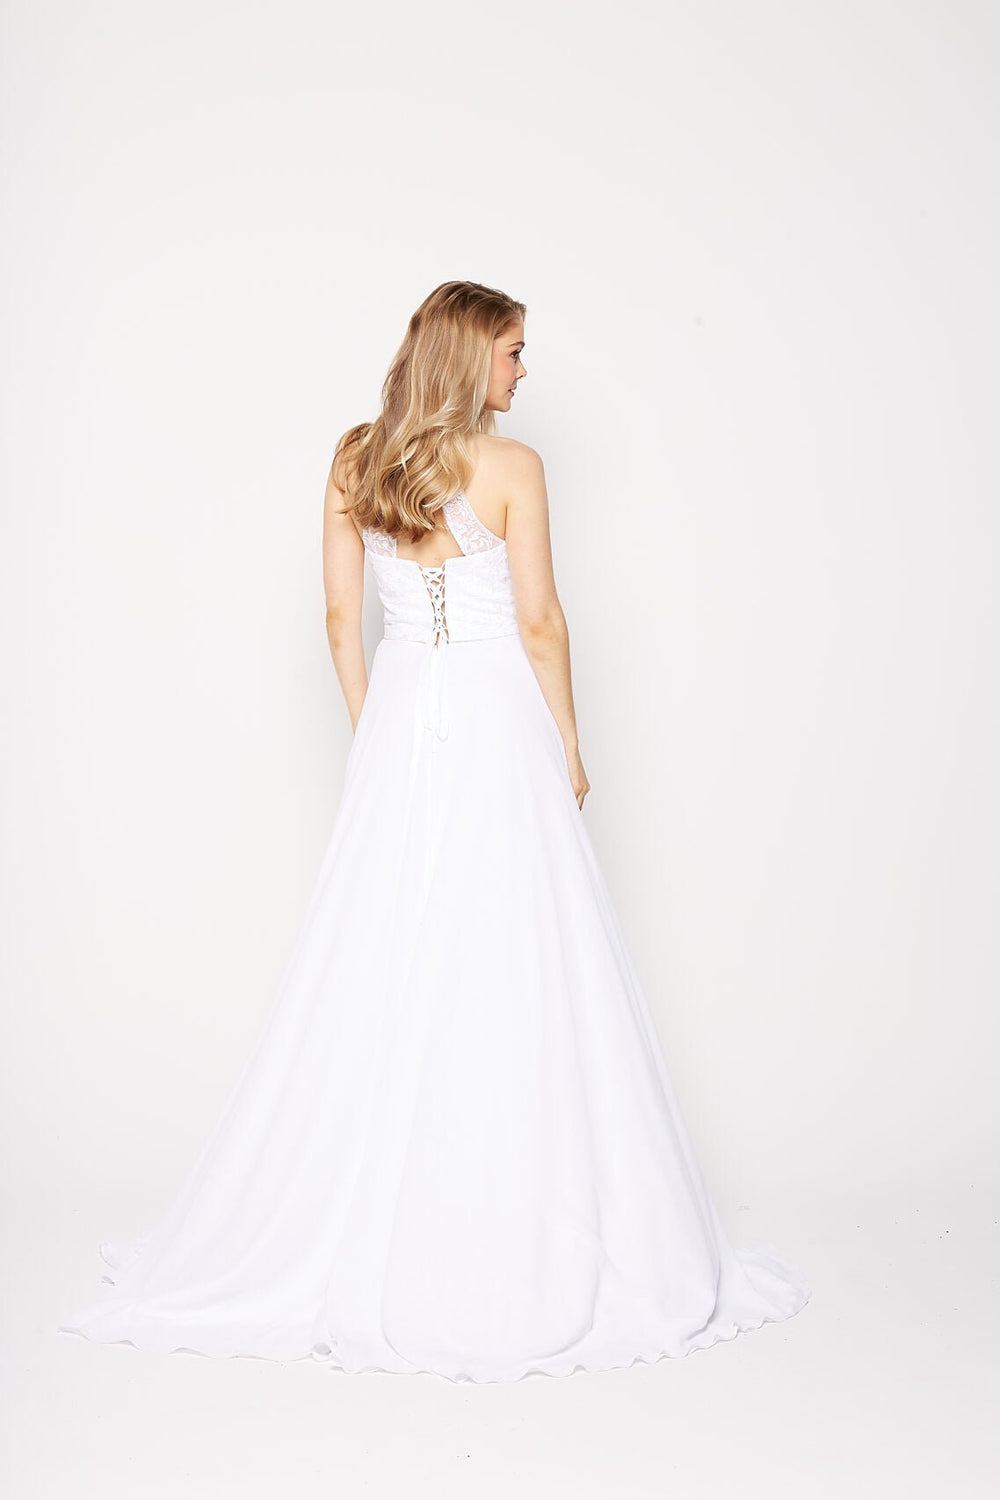 Heather Dress in White by Tania Olsen PO2310 - ElissaJay Boutique